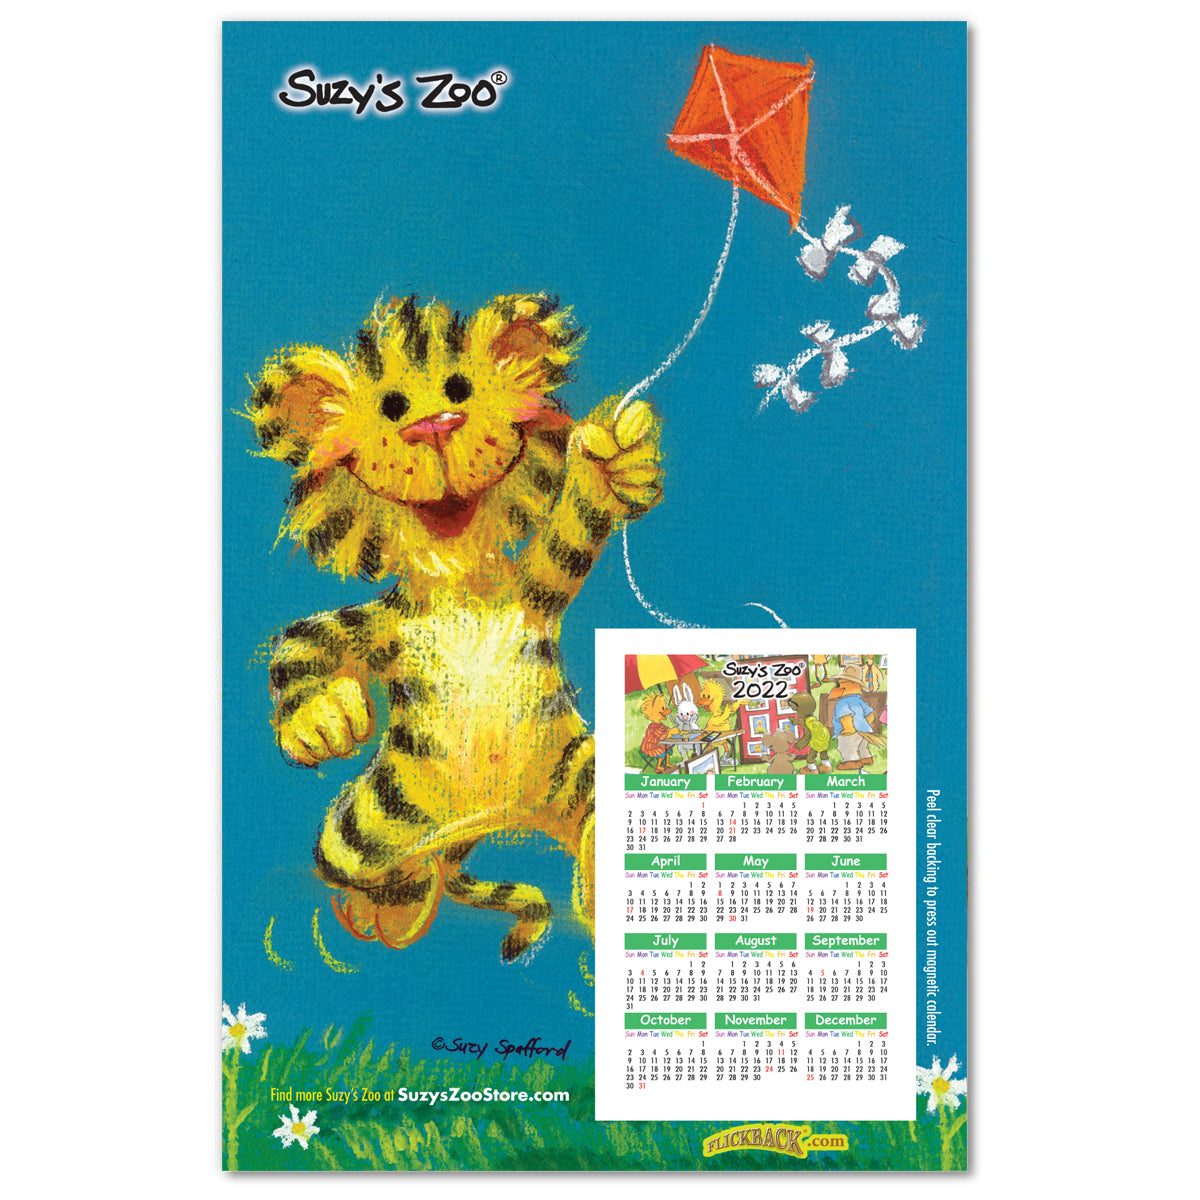 Suzy's Zoo 2022 Calendar Suzy's Zoo Store